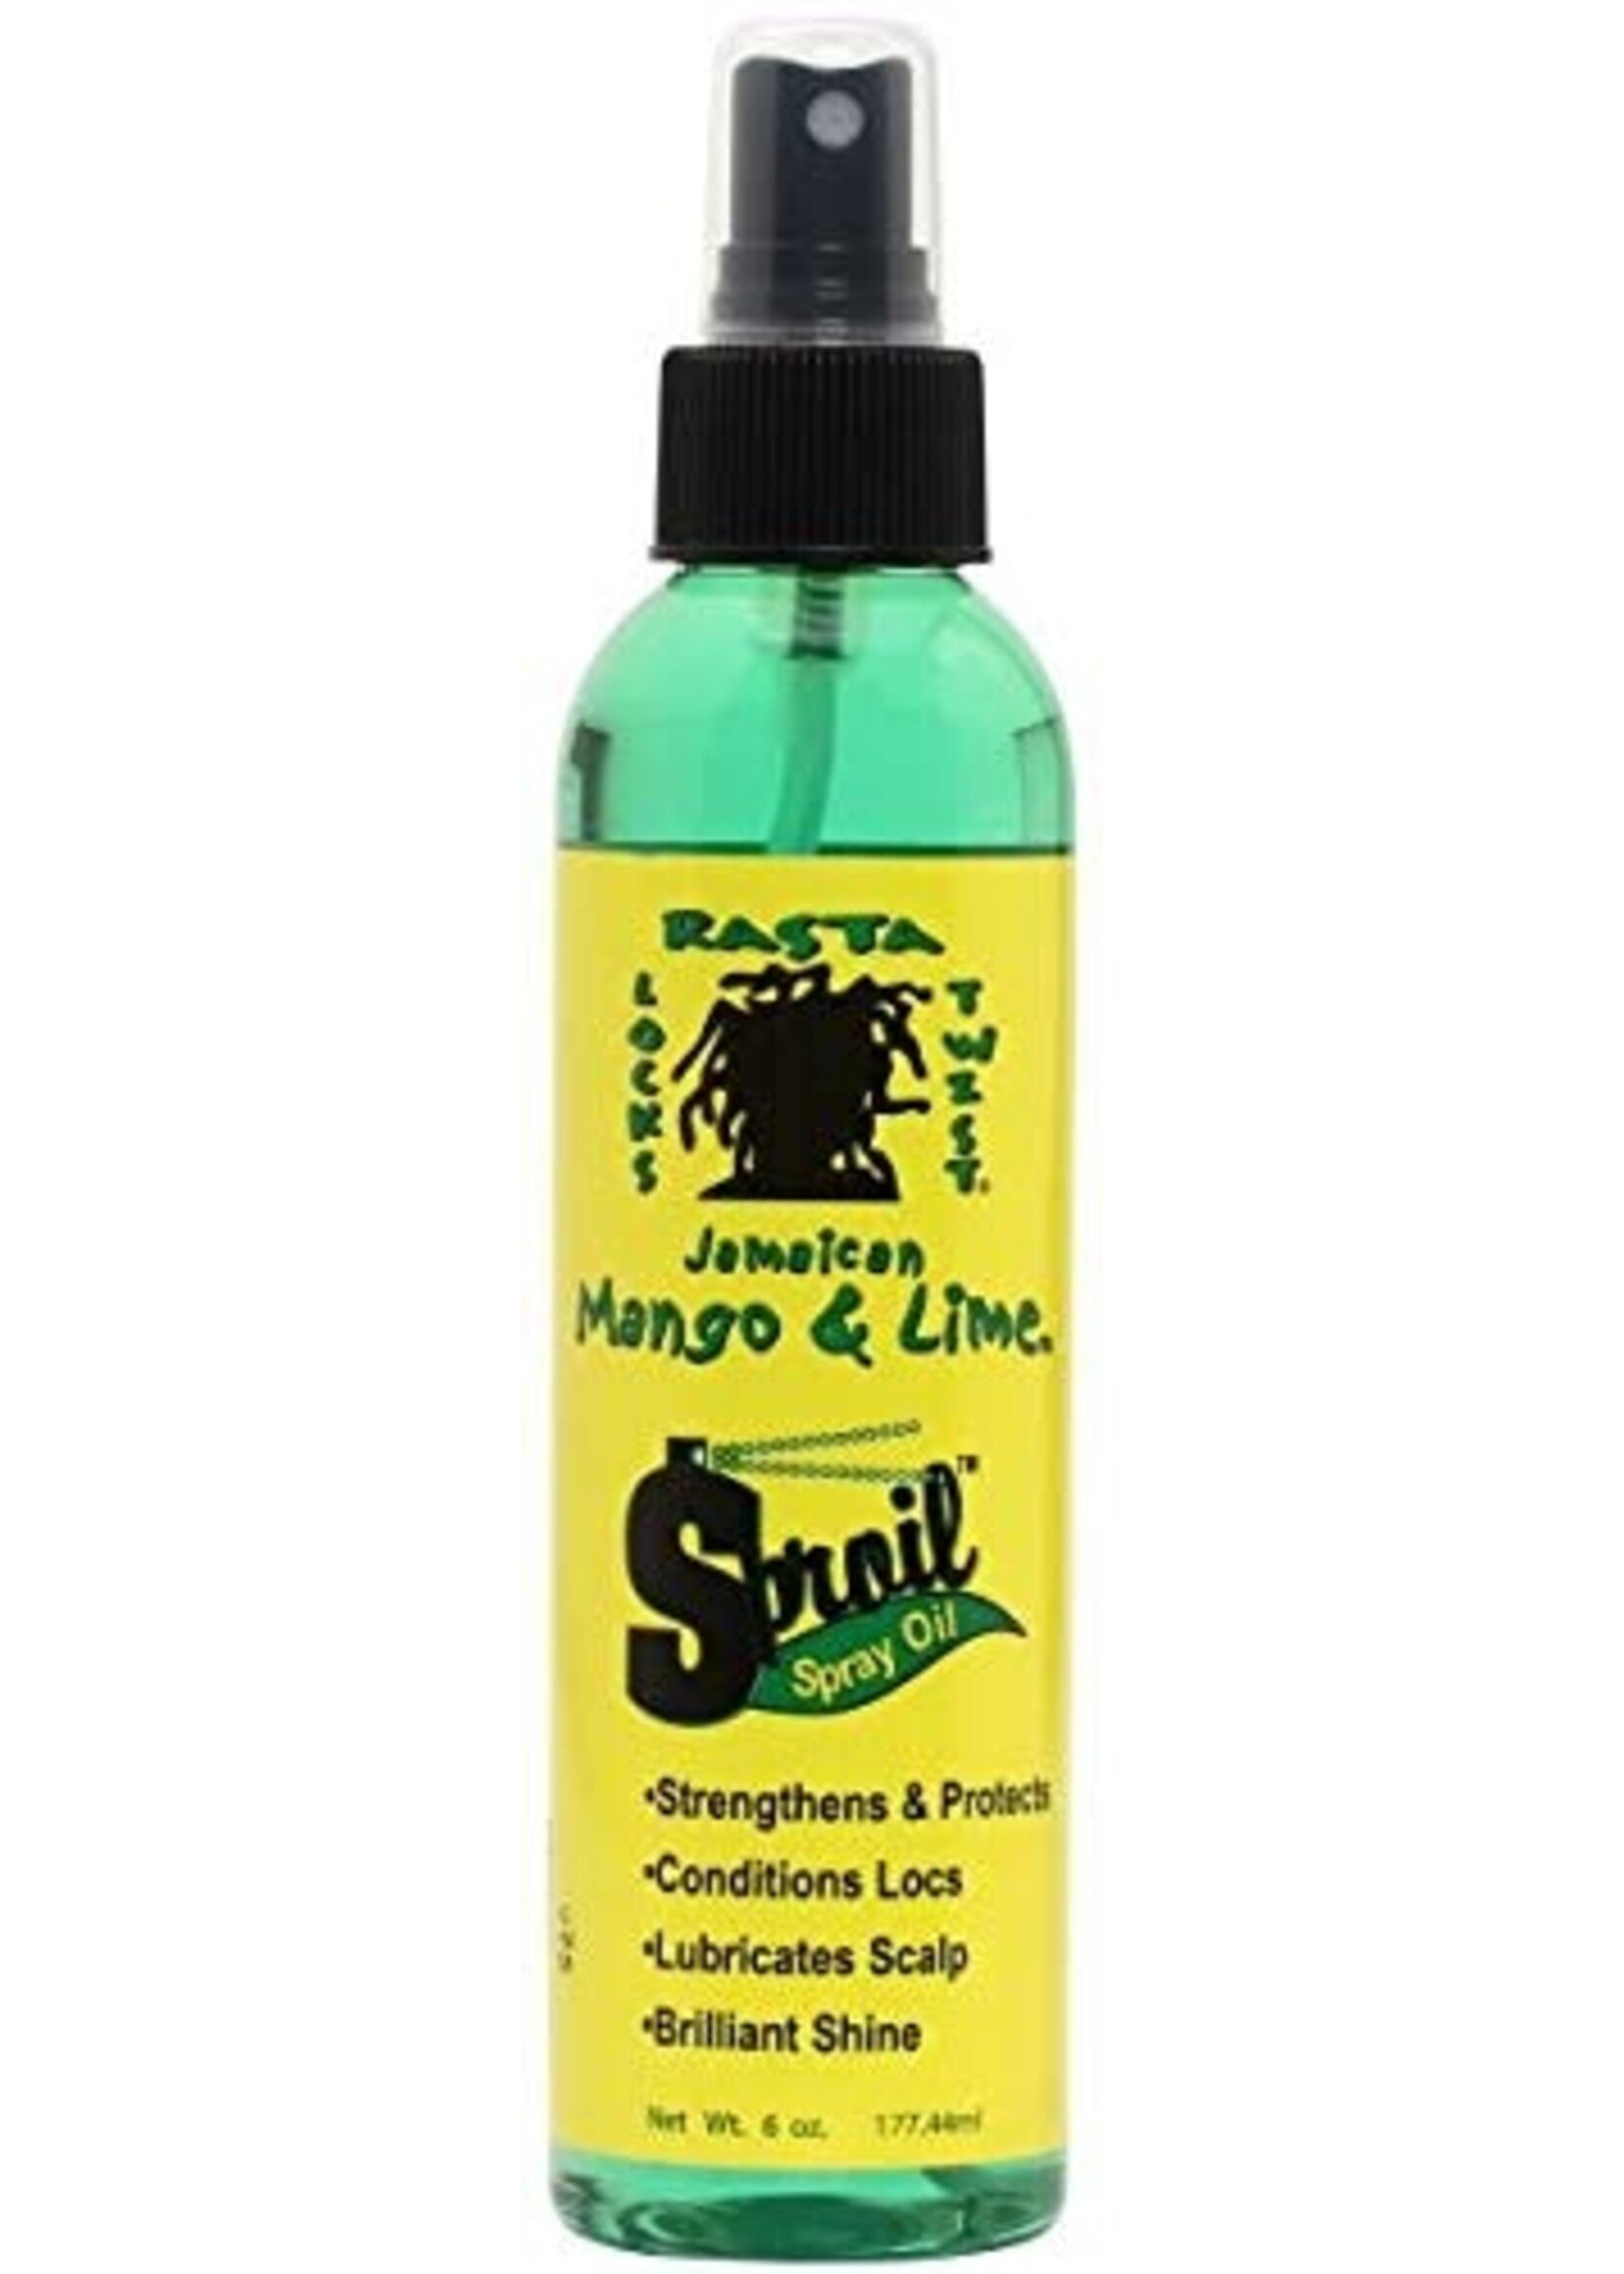 JML Sproil Stimulating Spray Oil 6oz